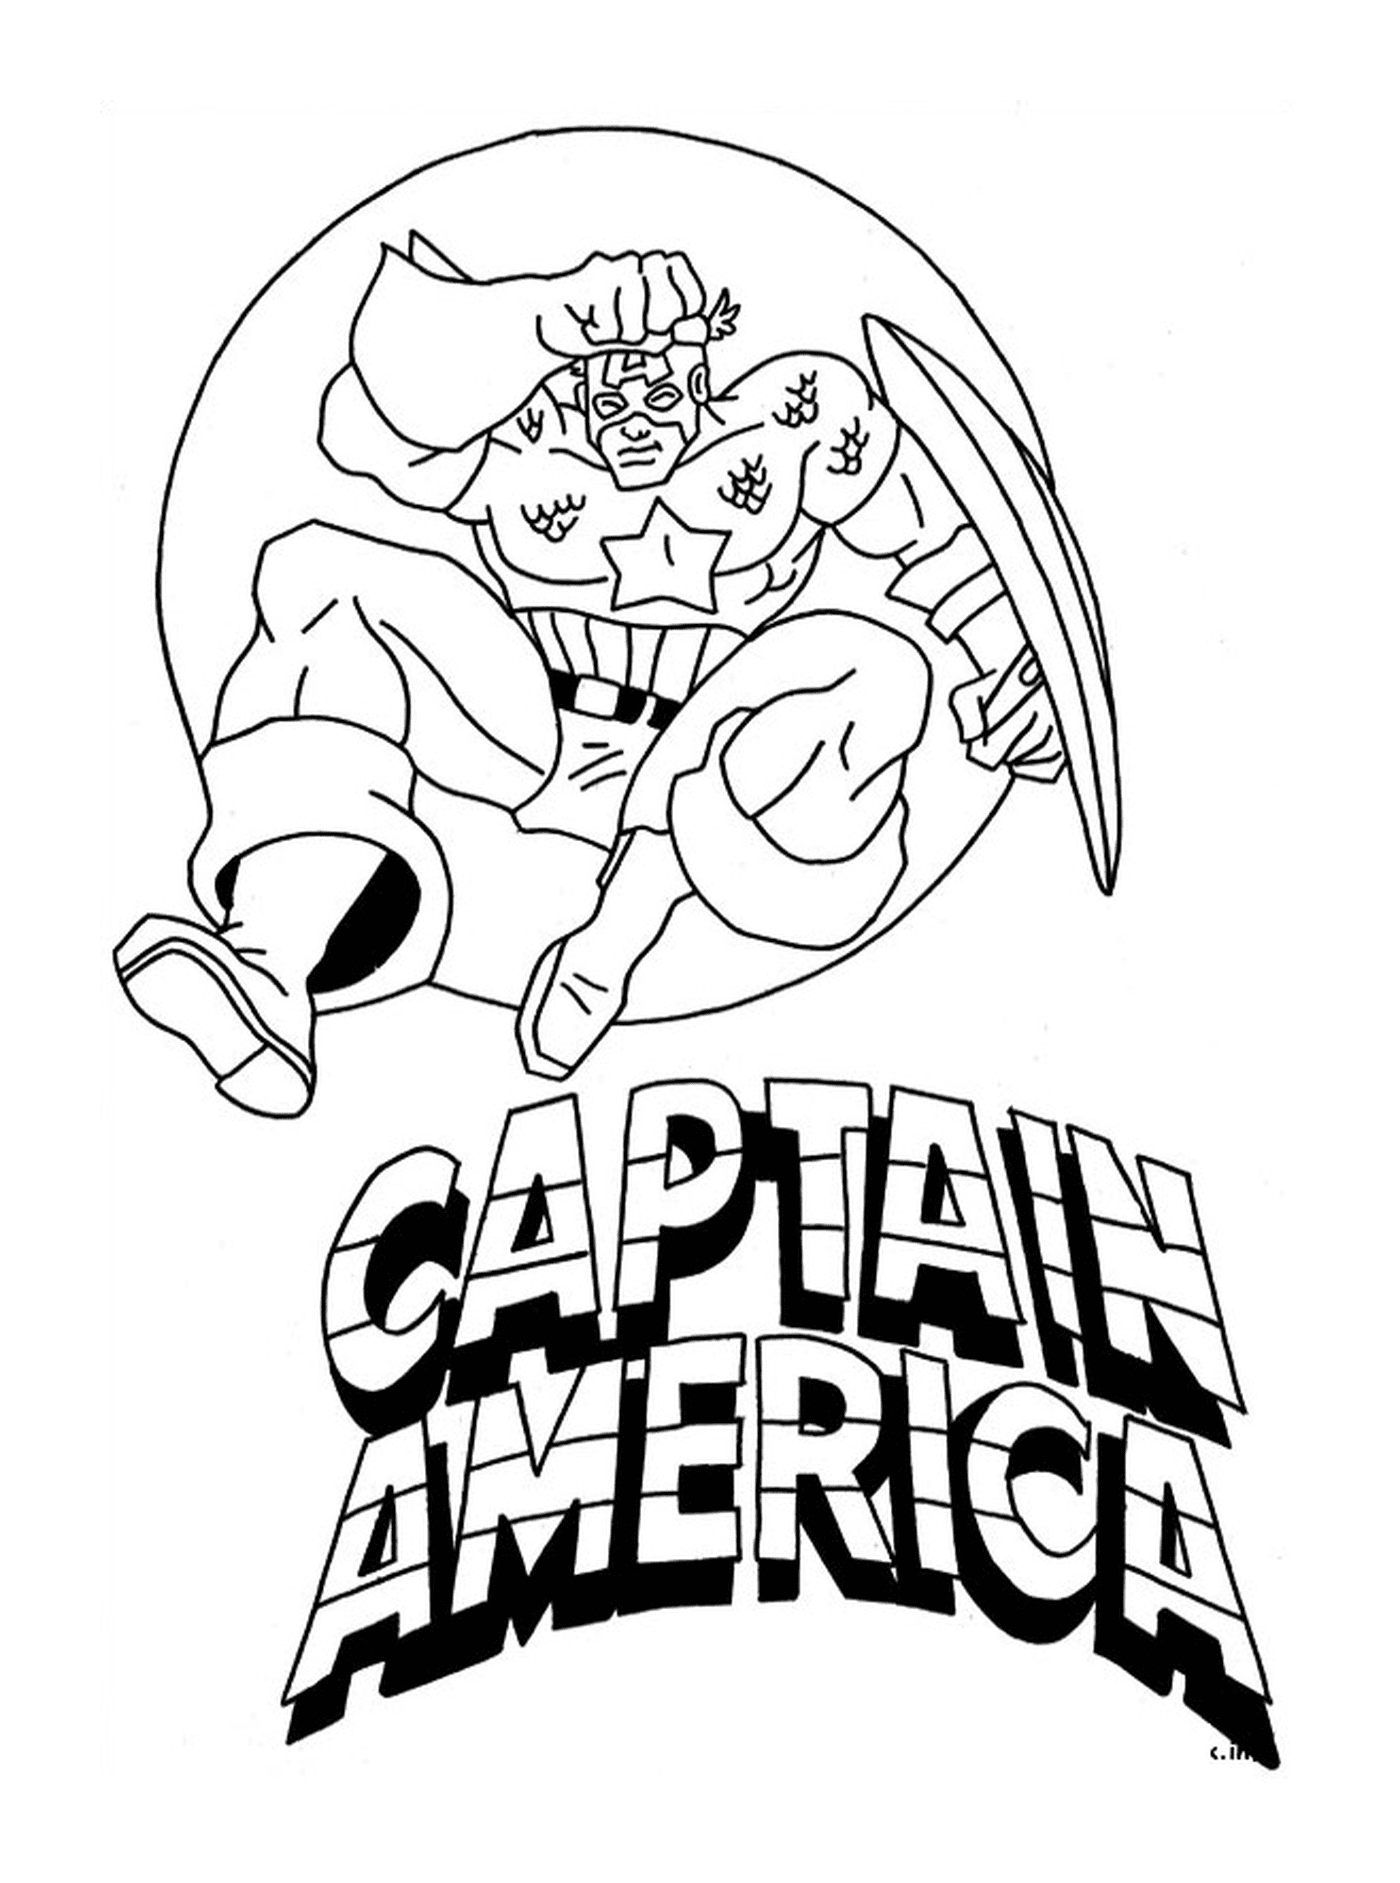   Captain America avec un logo, image d'un Captain America 